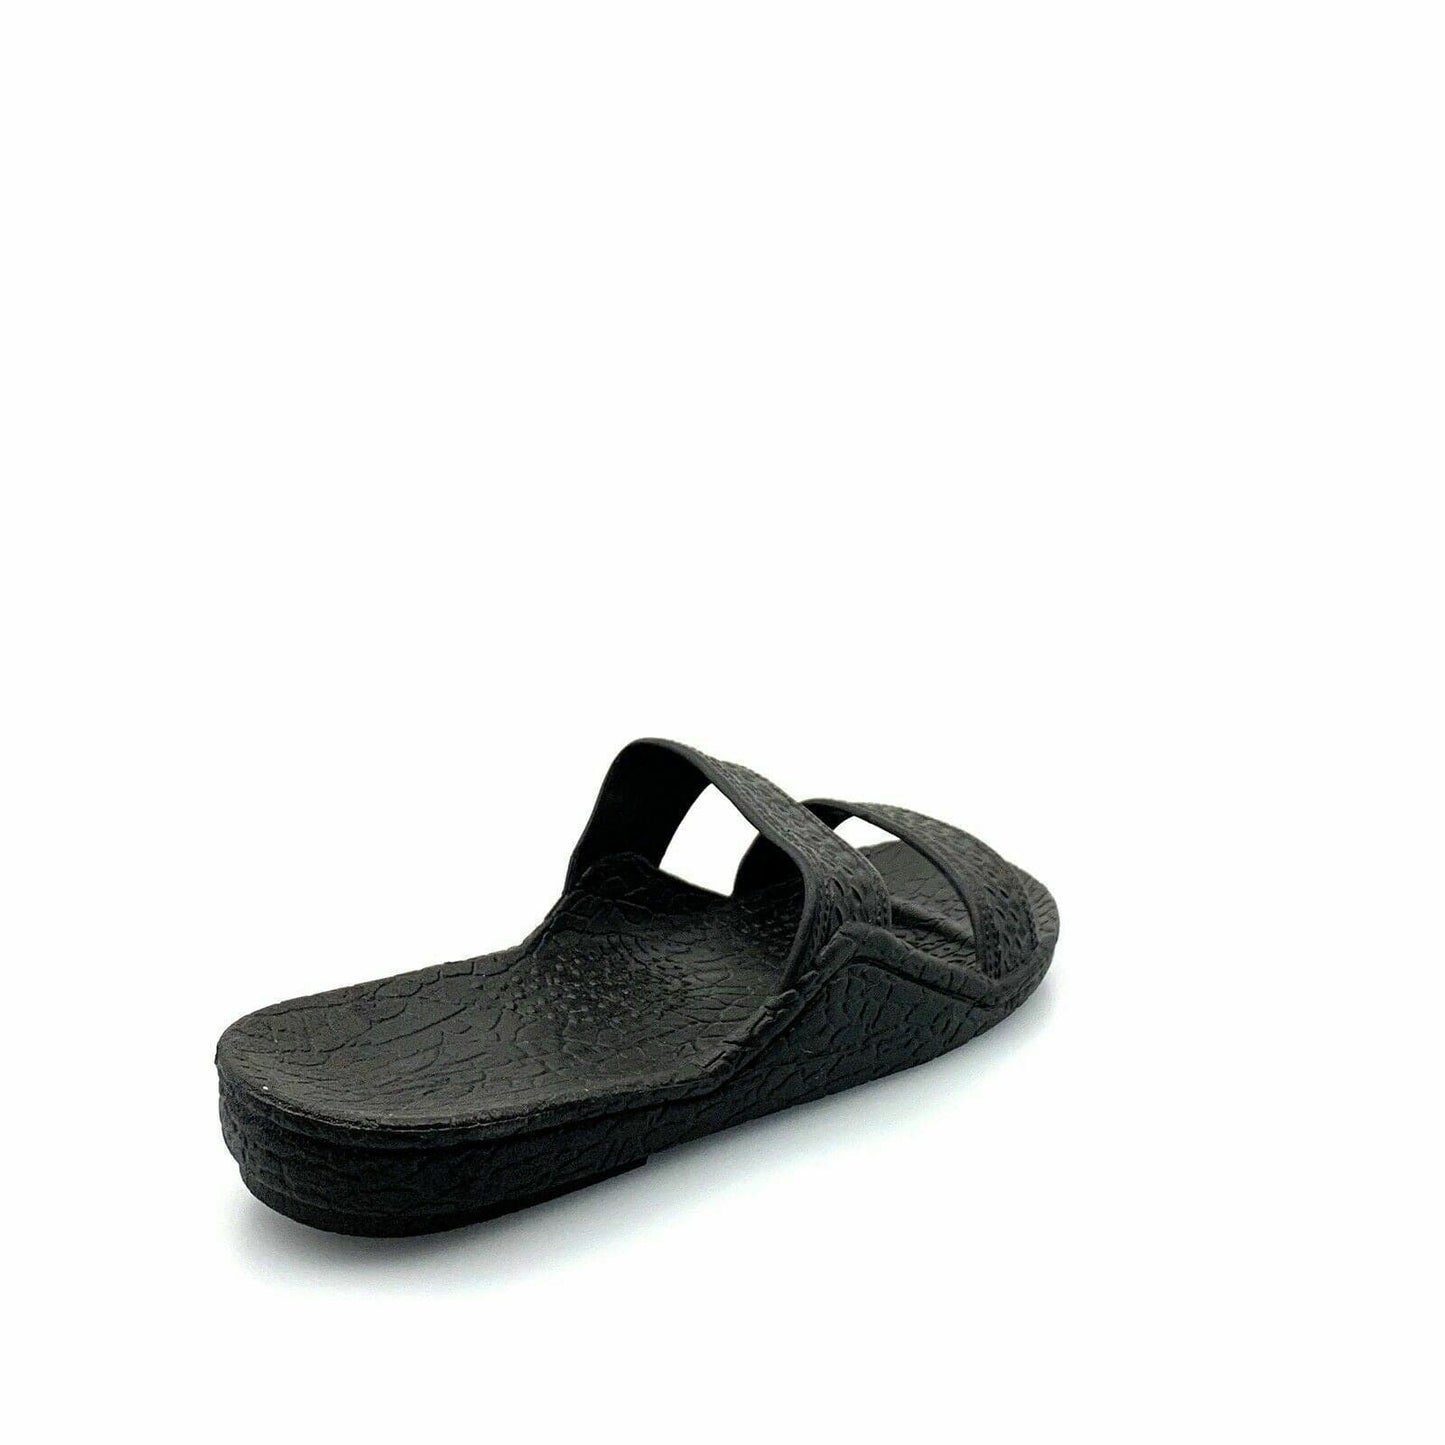 Pali Hawaii Size 13 Black Rubber Sandals Classic Jandals Slides Shower Shoes